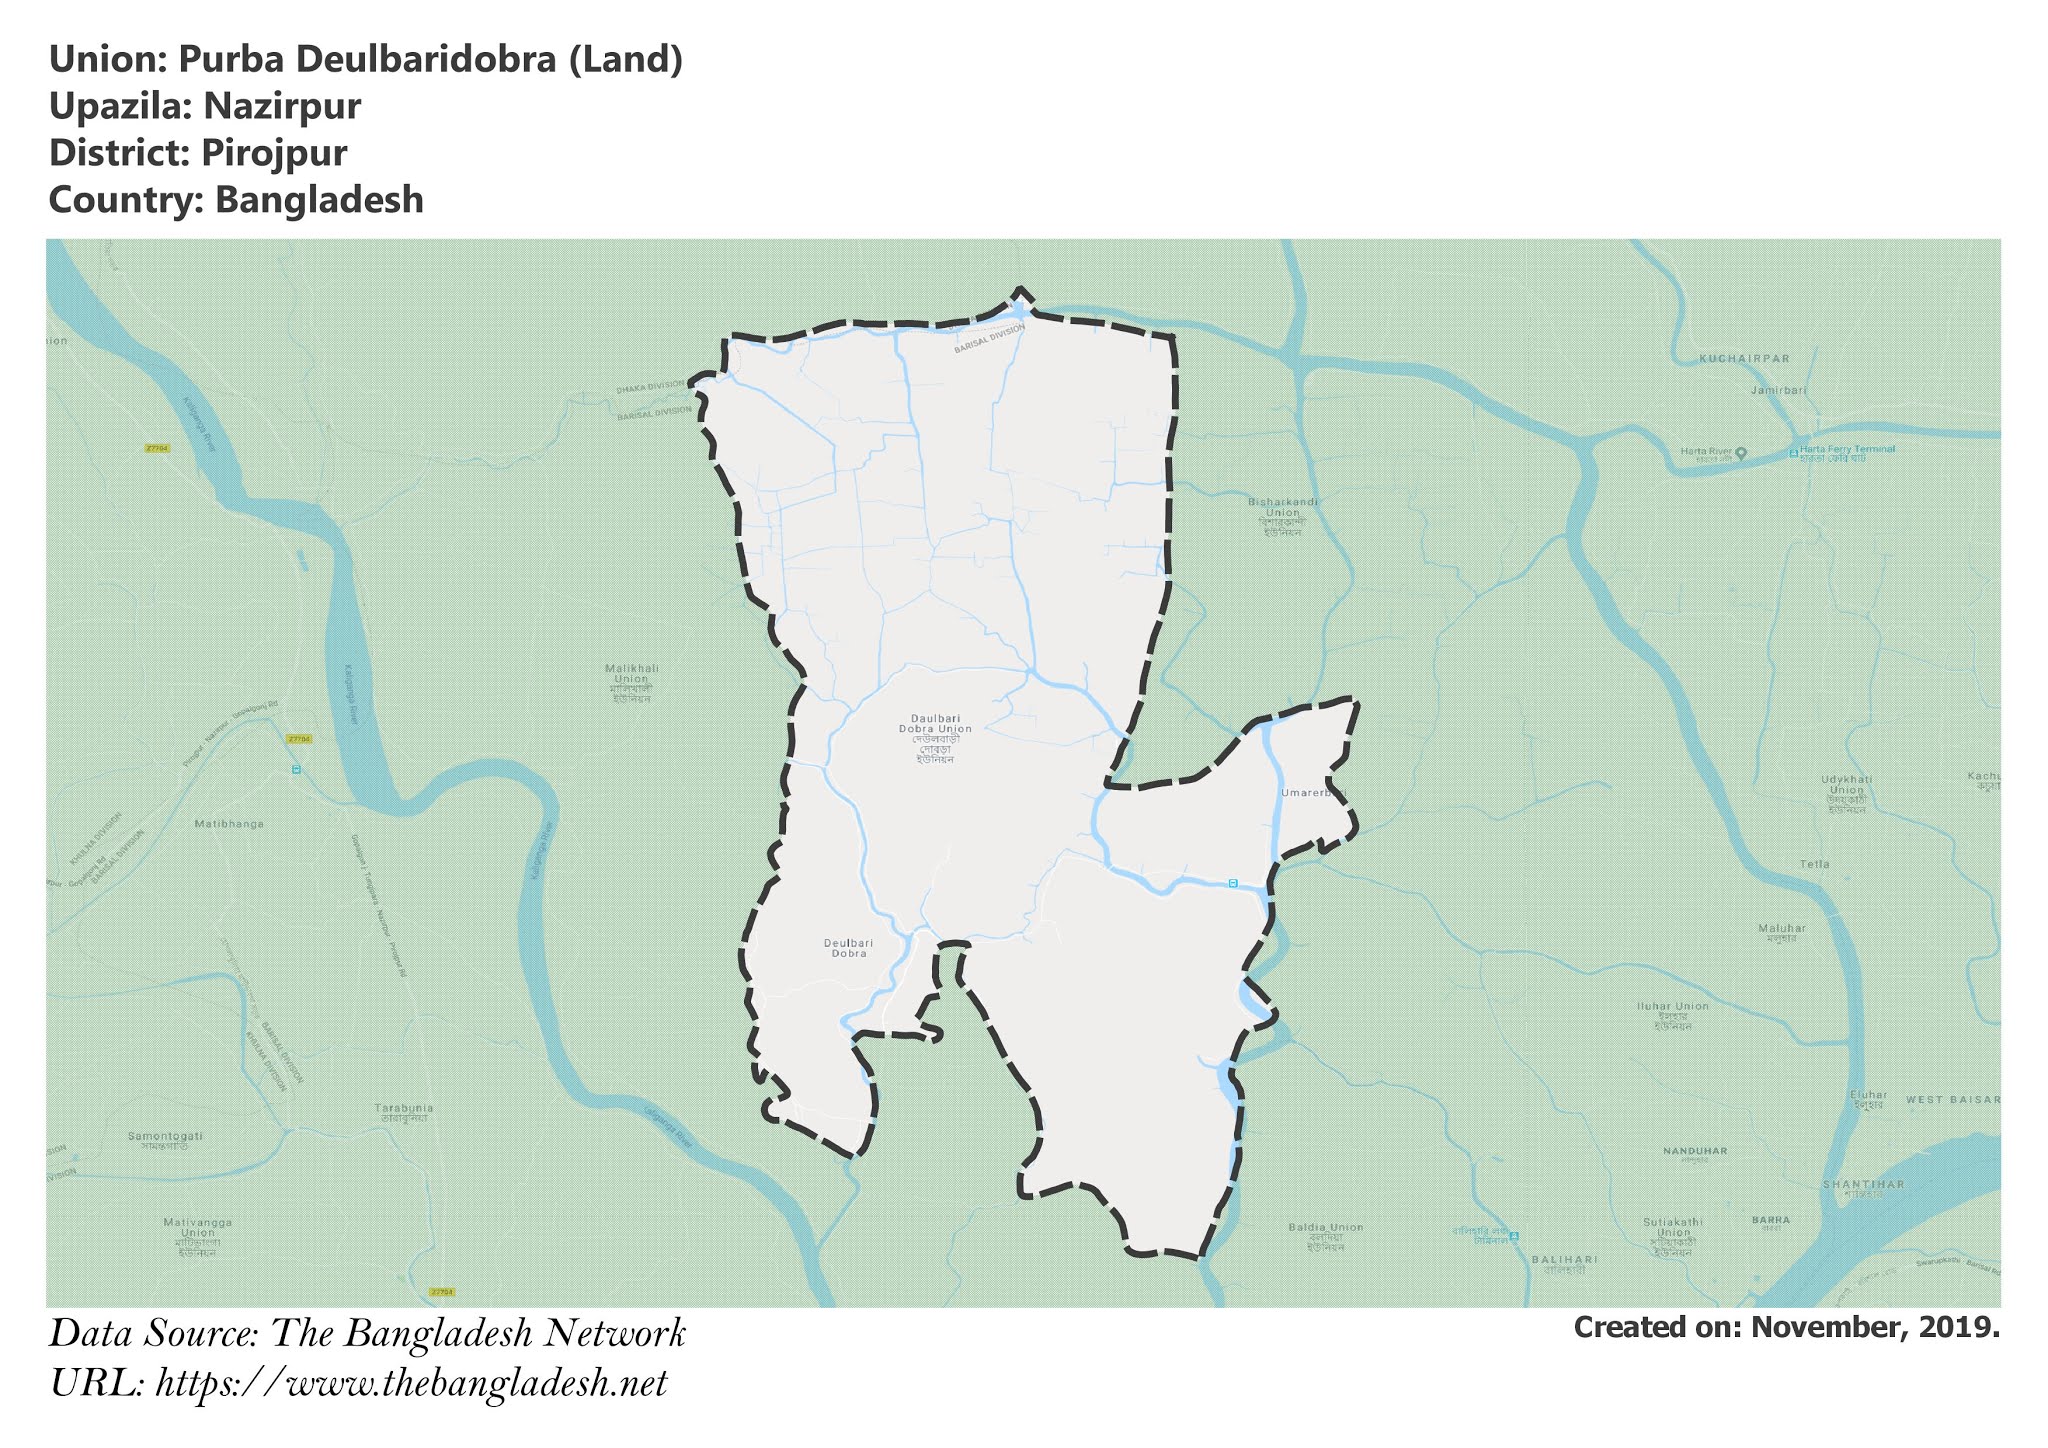 Map of Purba Deulbaridobra of Pirojpur, Bangladesh.